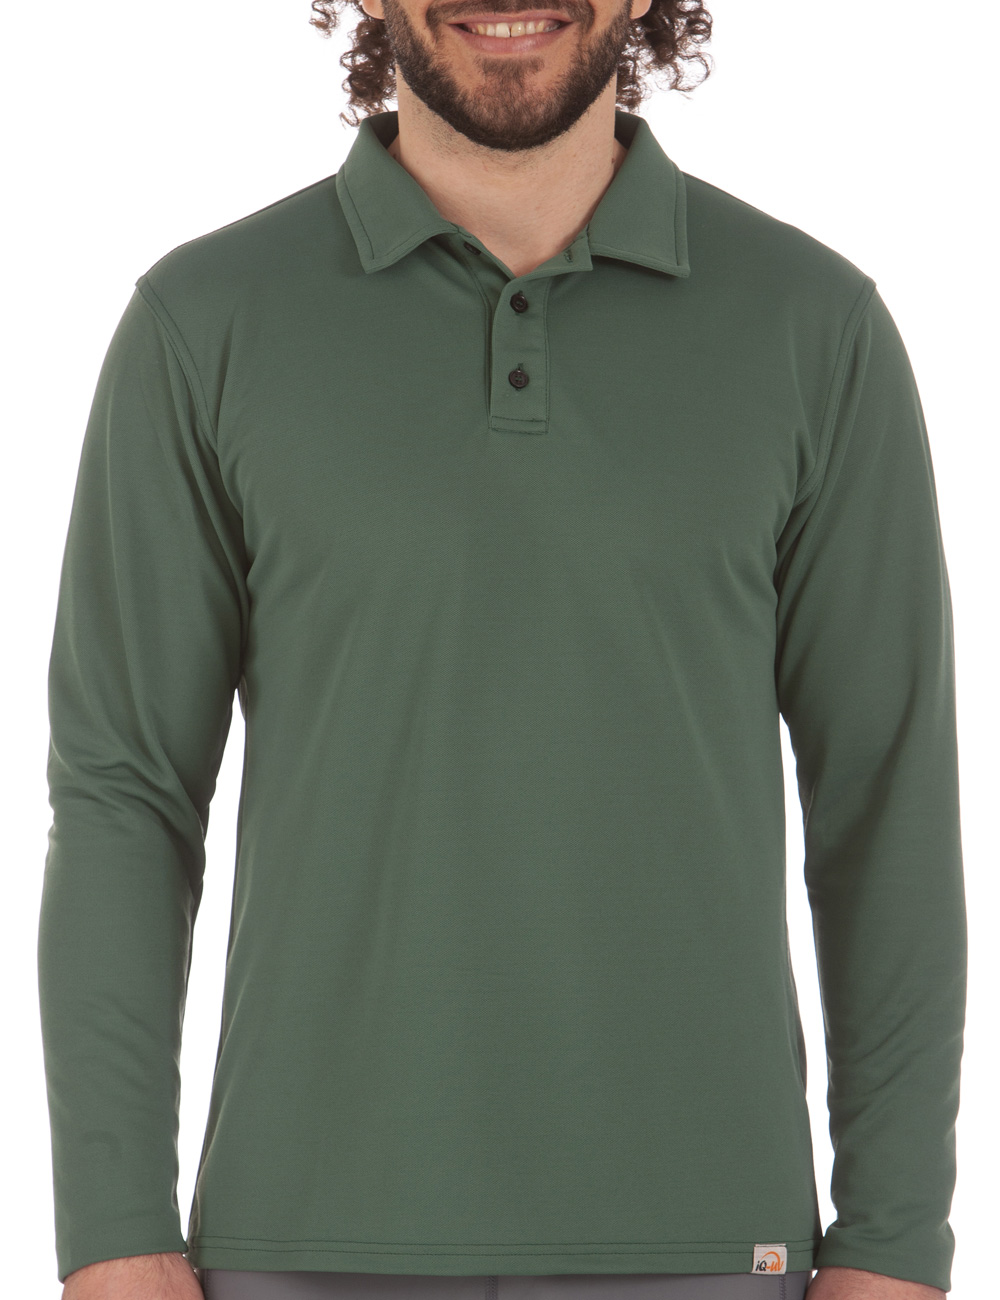 UV Schutz Polo Shirt langarm recycelt Herren grün poloshirt